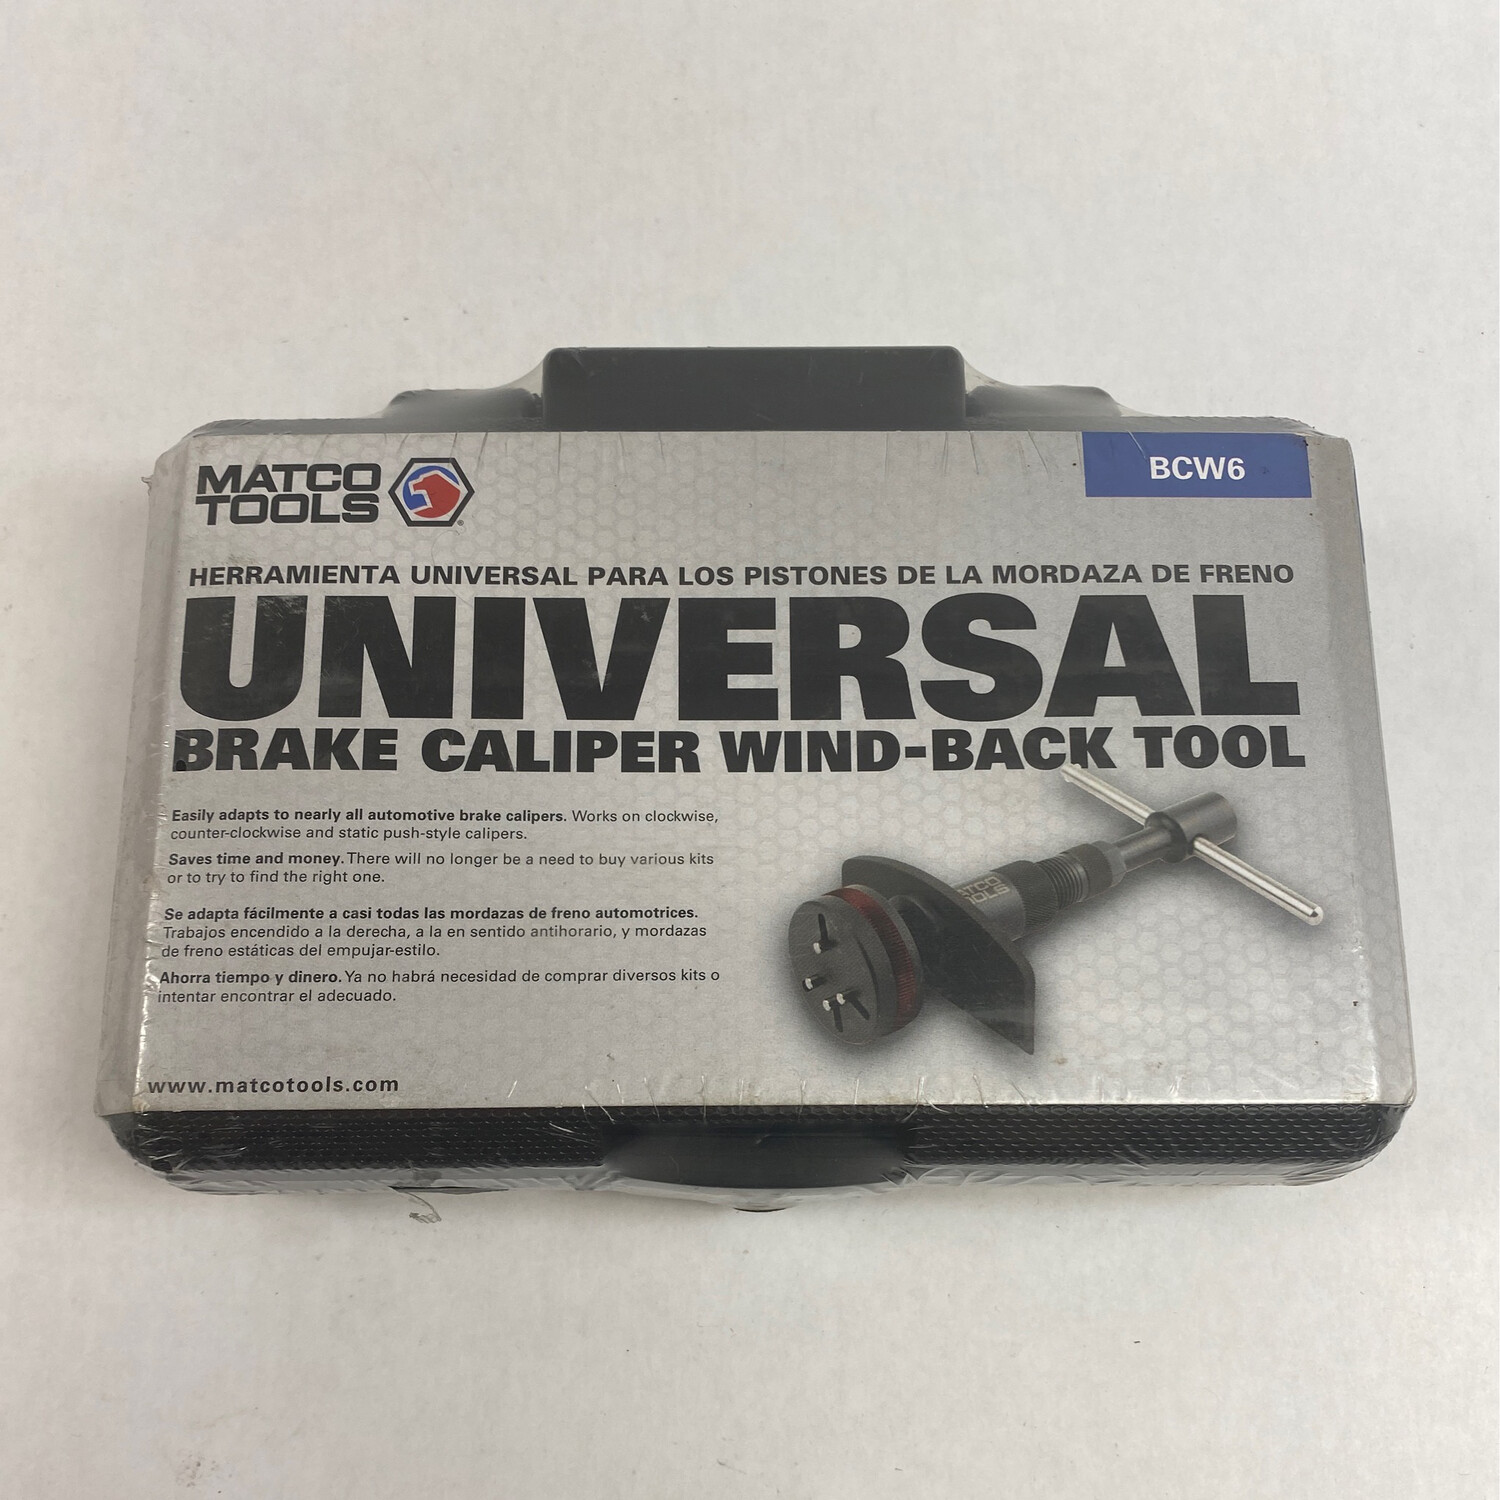 Matco Tools Universal Brake Caliper Wind-back Tool, BCW6